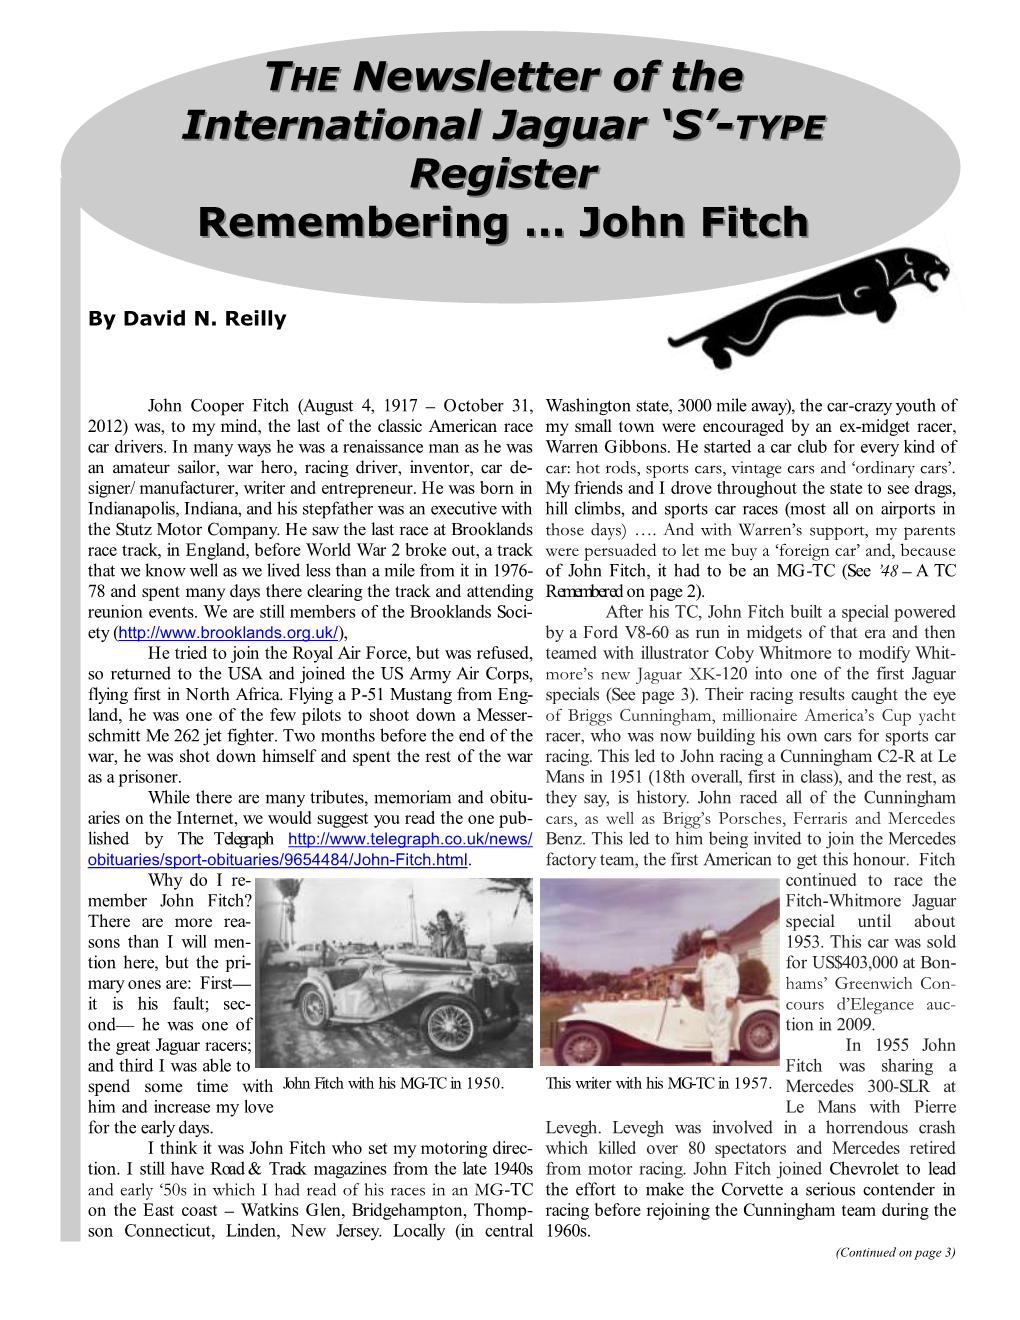 Remembering John Fitch